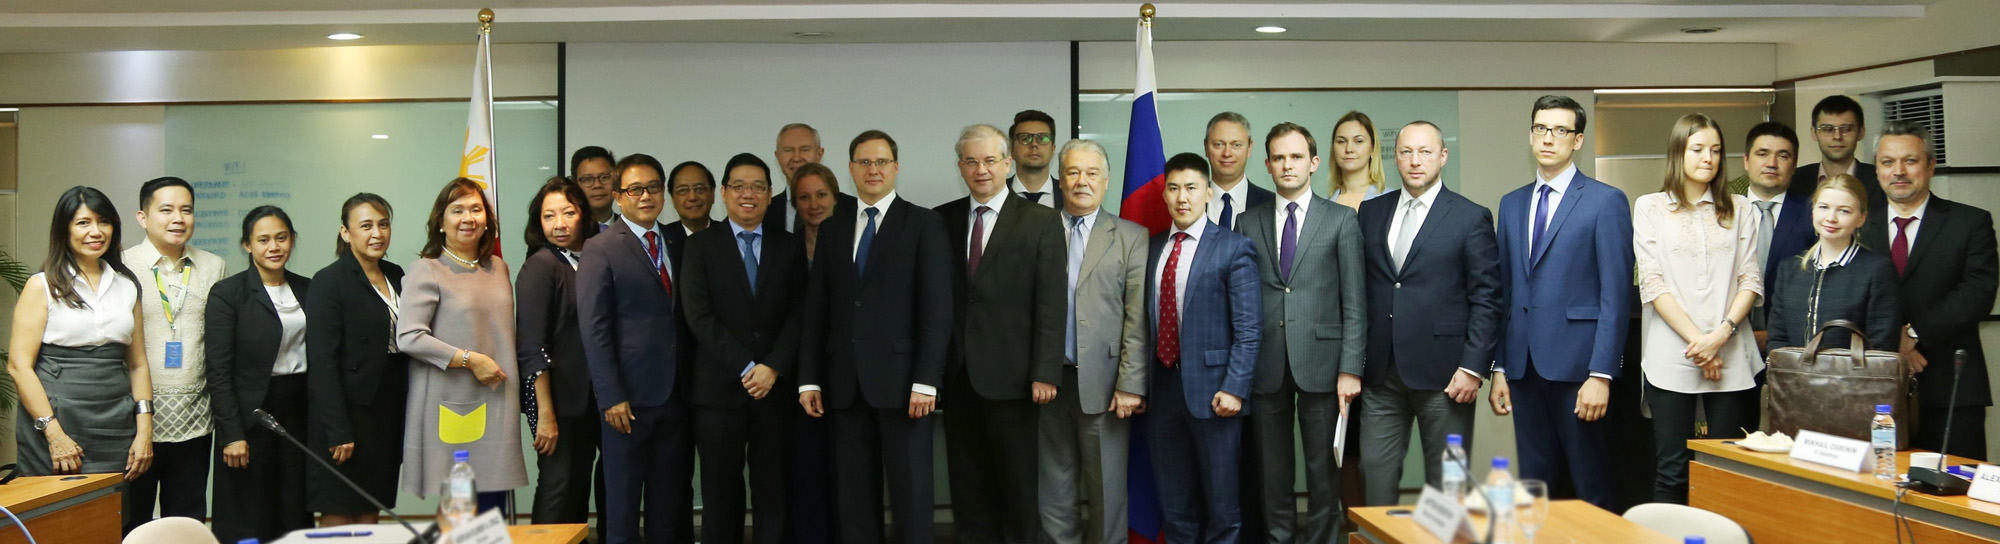 Usec Barba with Russian delegation